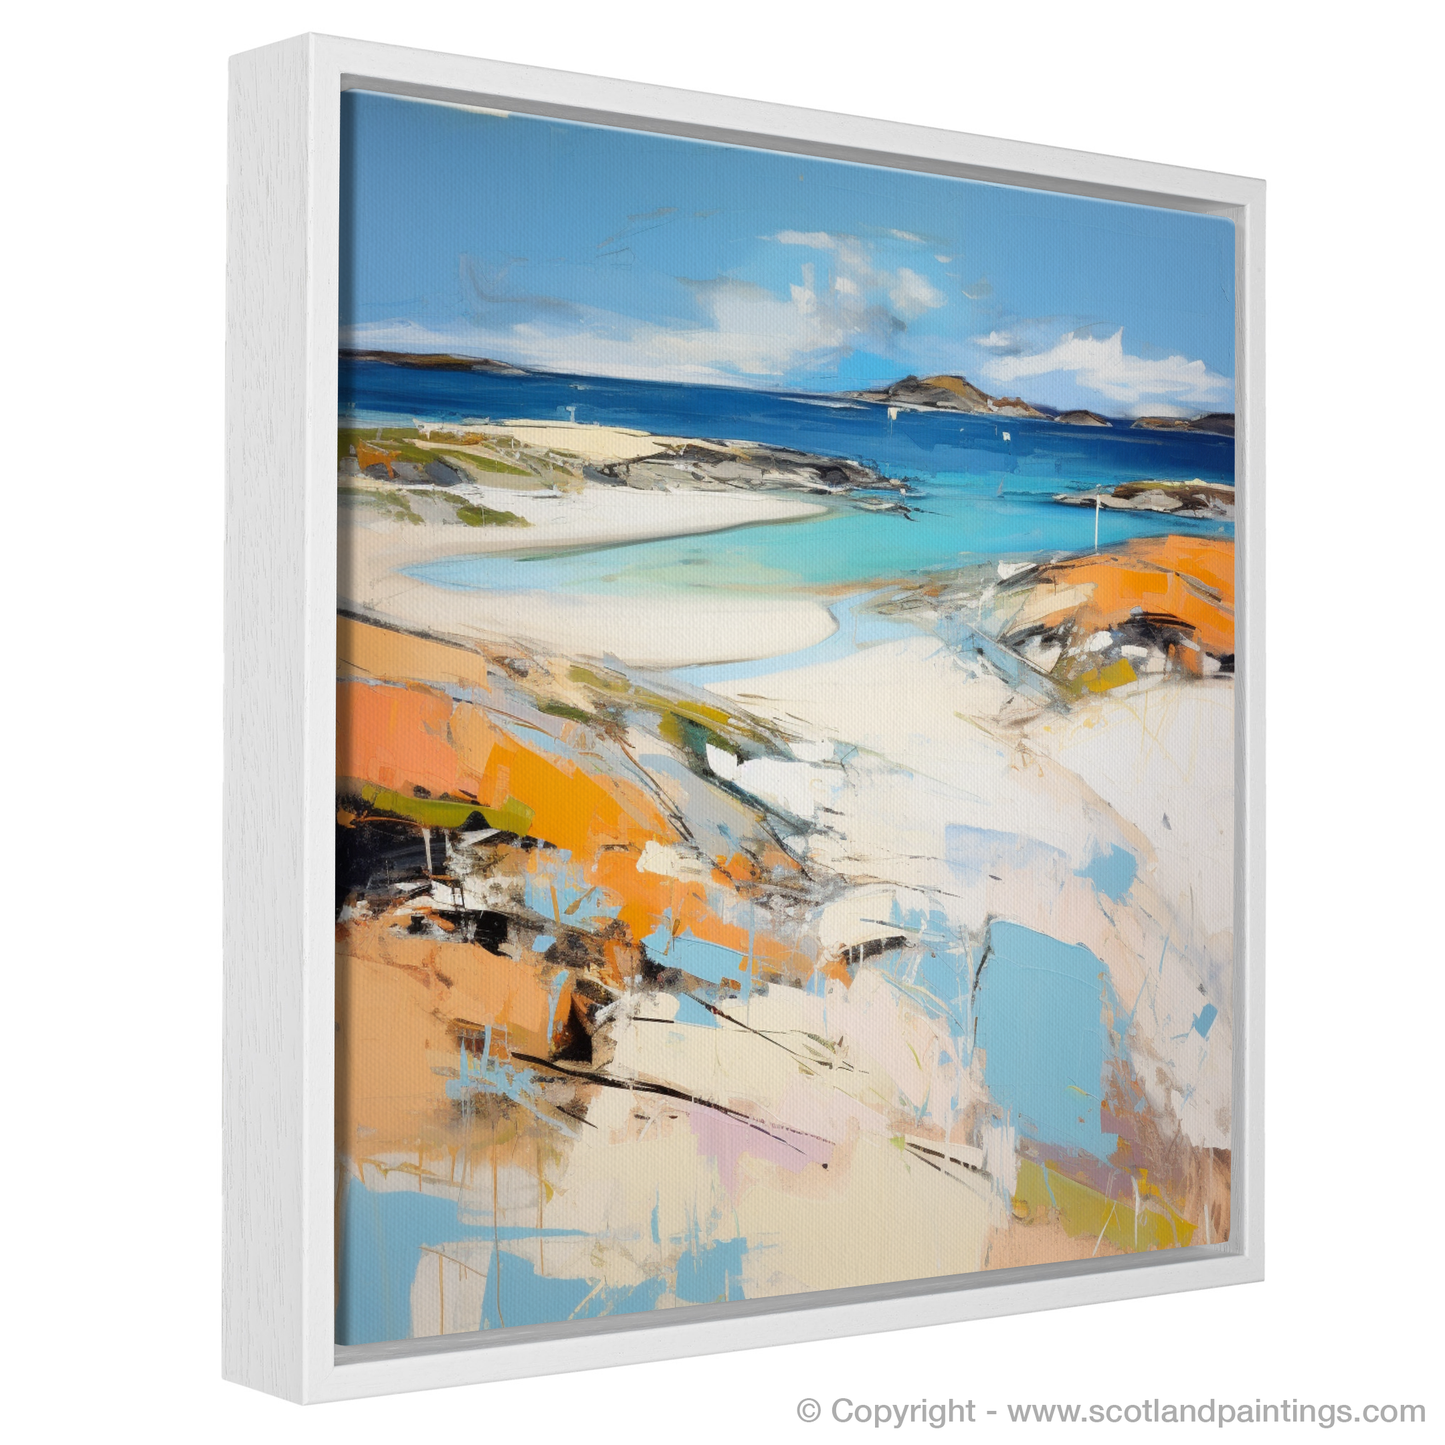 Painting and Art Print of Camusdarach Beach, Arisaig entitled "Abstract Impressions of Camusdarach Beach Arisaig".